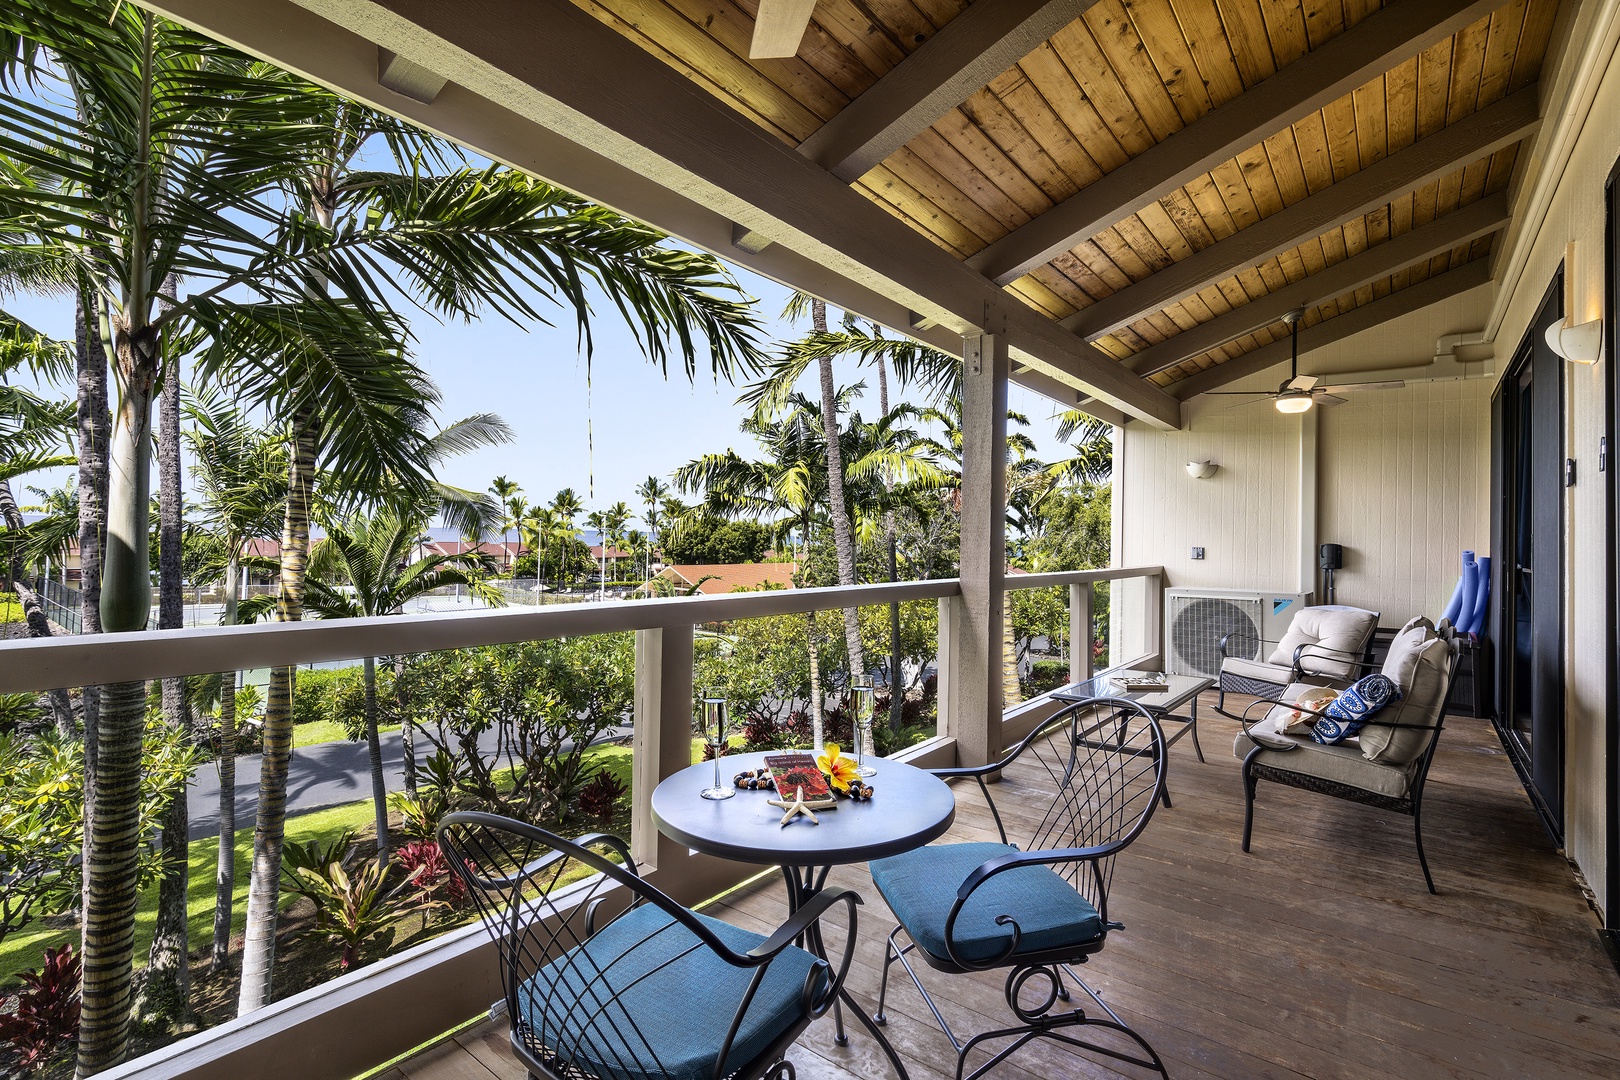 Kailua Kona Vacation Rentals, Keauhou Kona Surf & Racquet 9303 - Surf & Racquet 9-303 offers a picturesque back drop from its spacious Lanai!